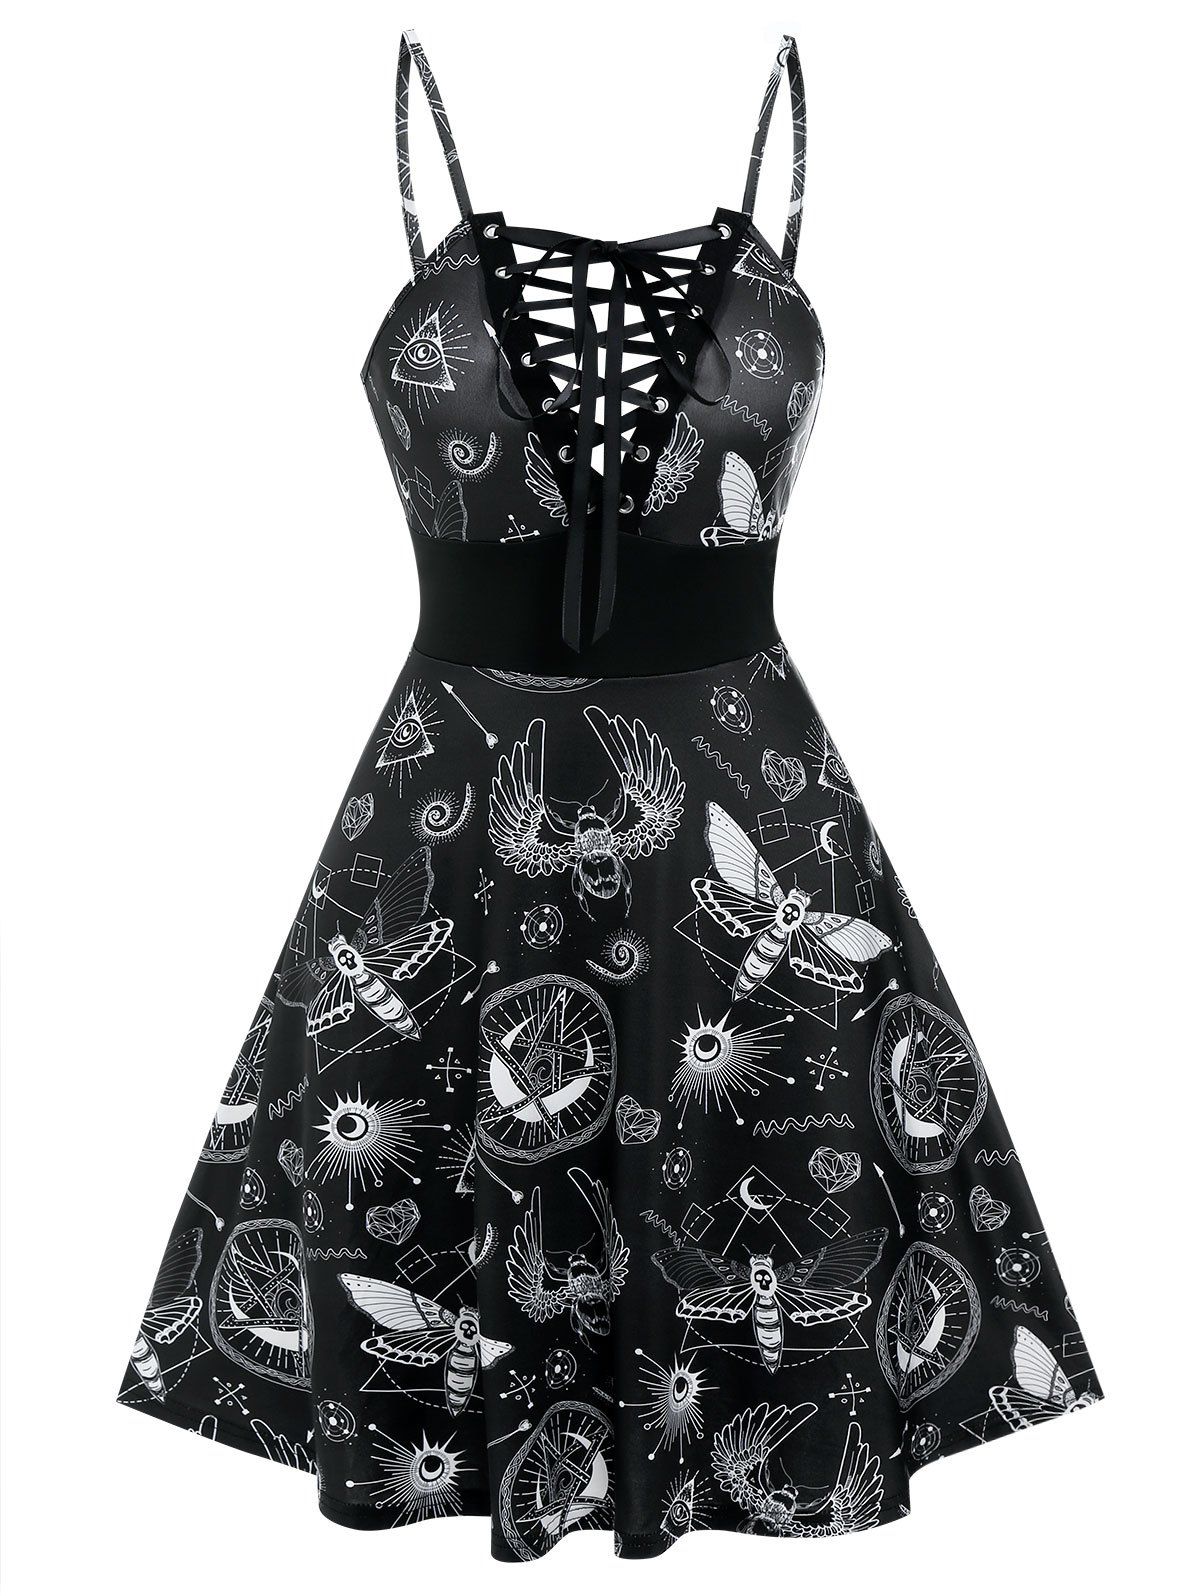 Plunge Lace Up Full Print Dress - BLACK XL